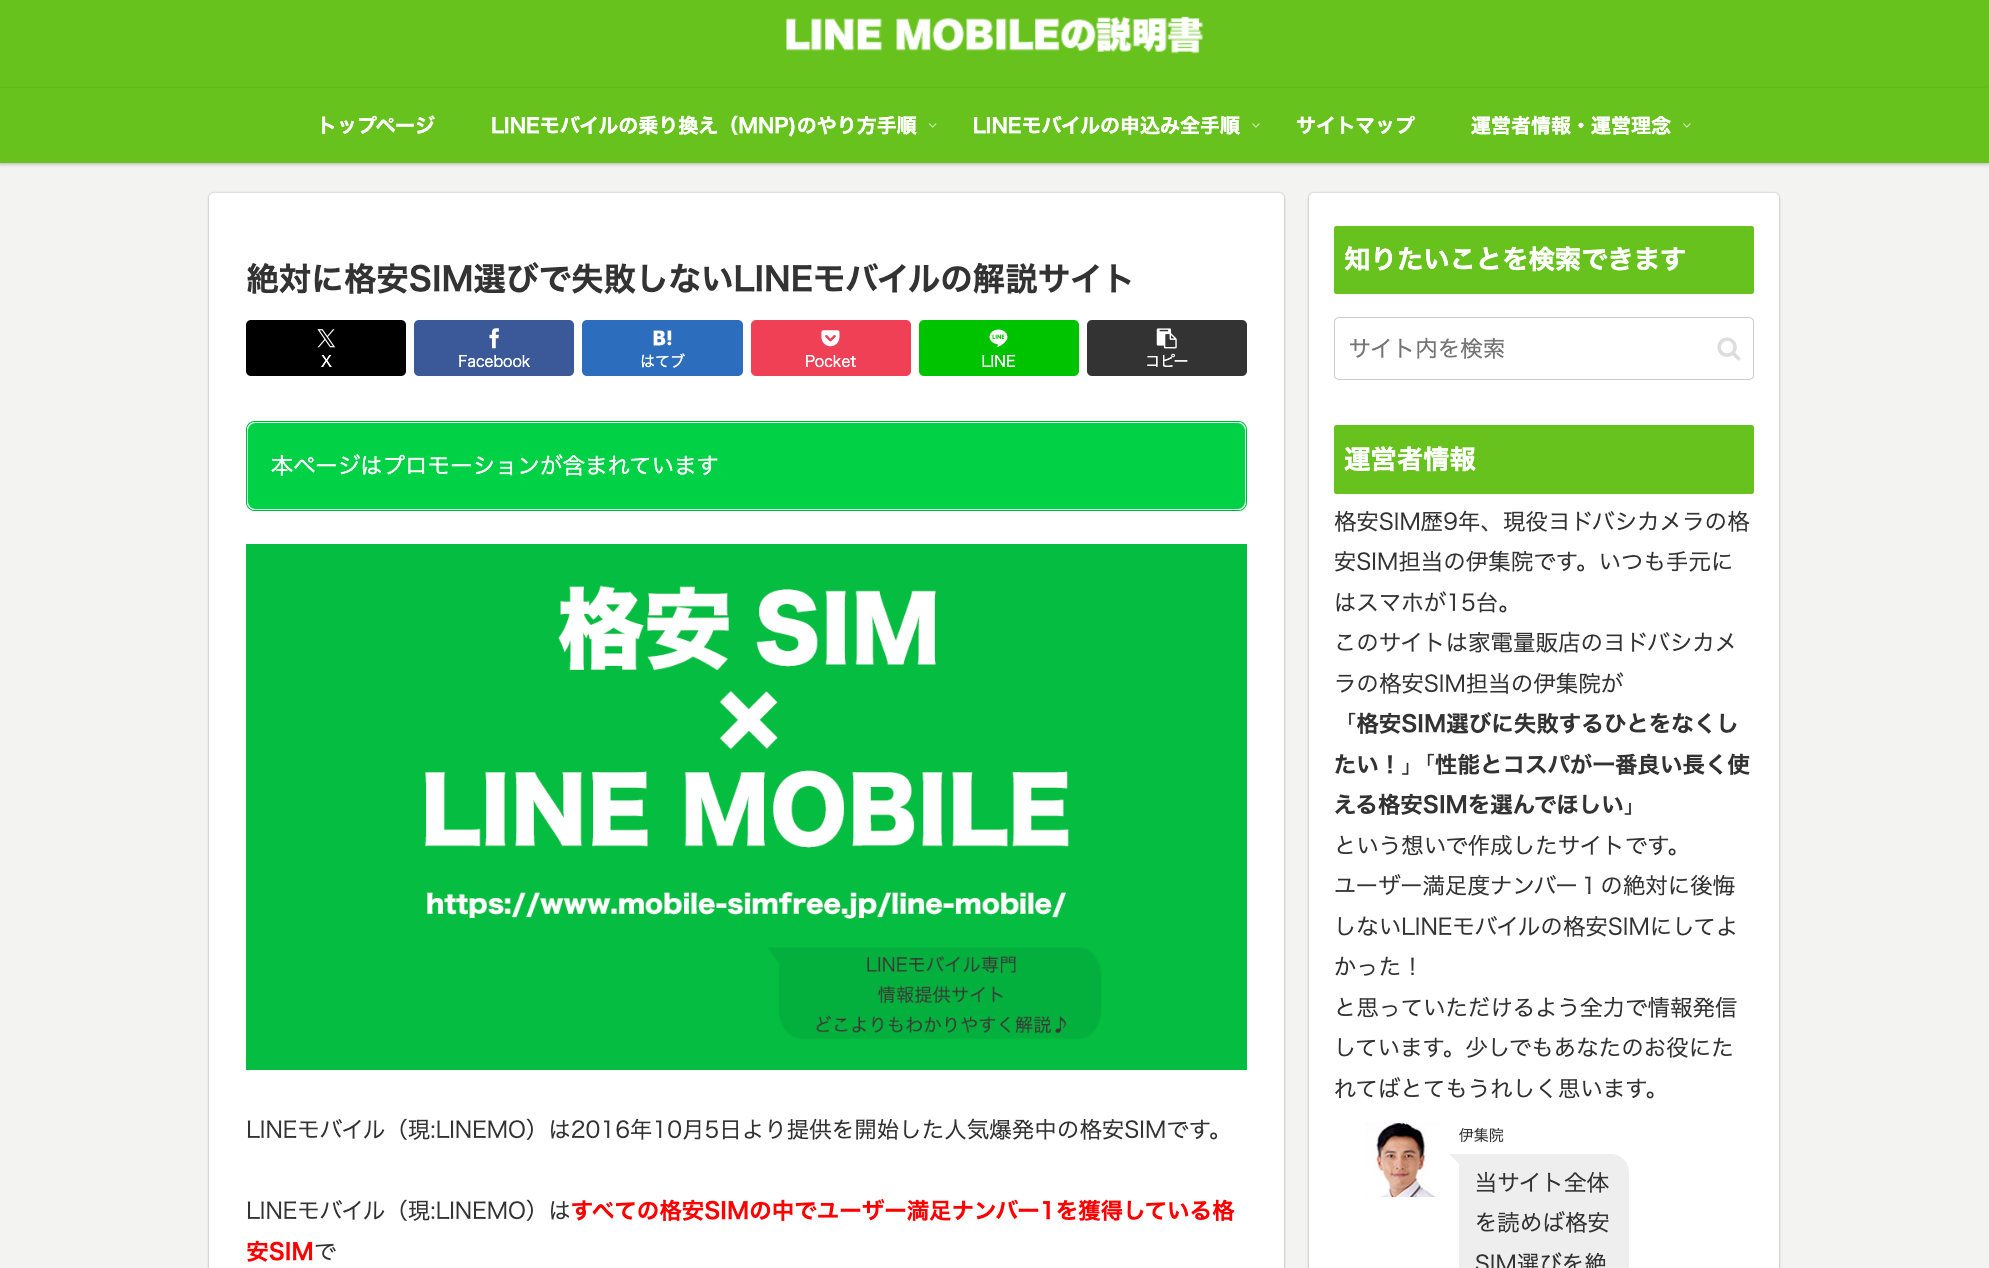 line-mobile-site WEB MEDIA